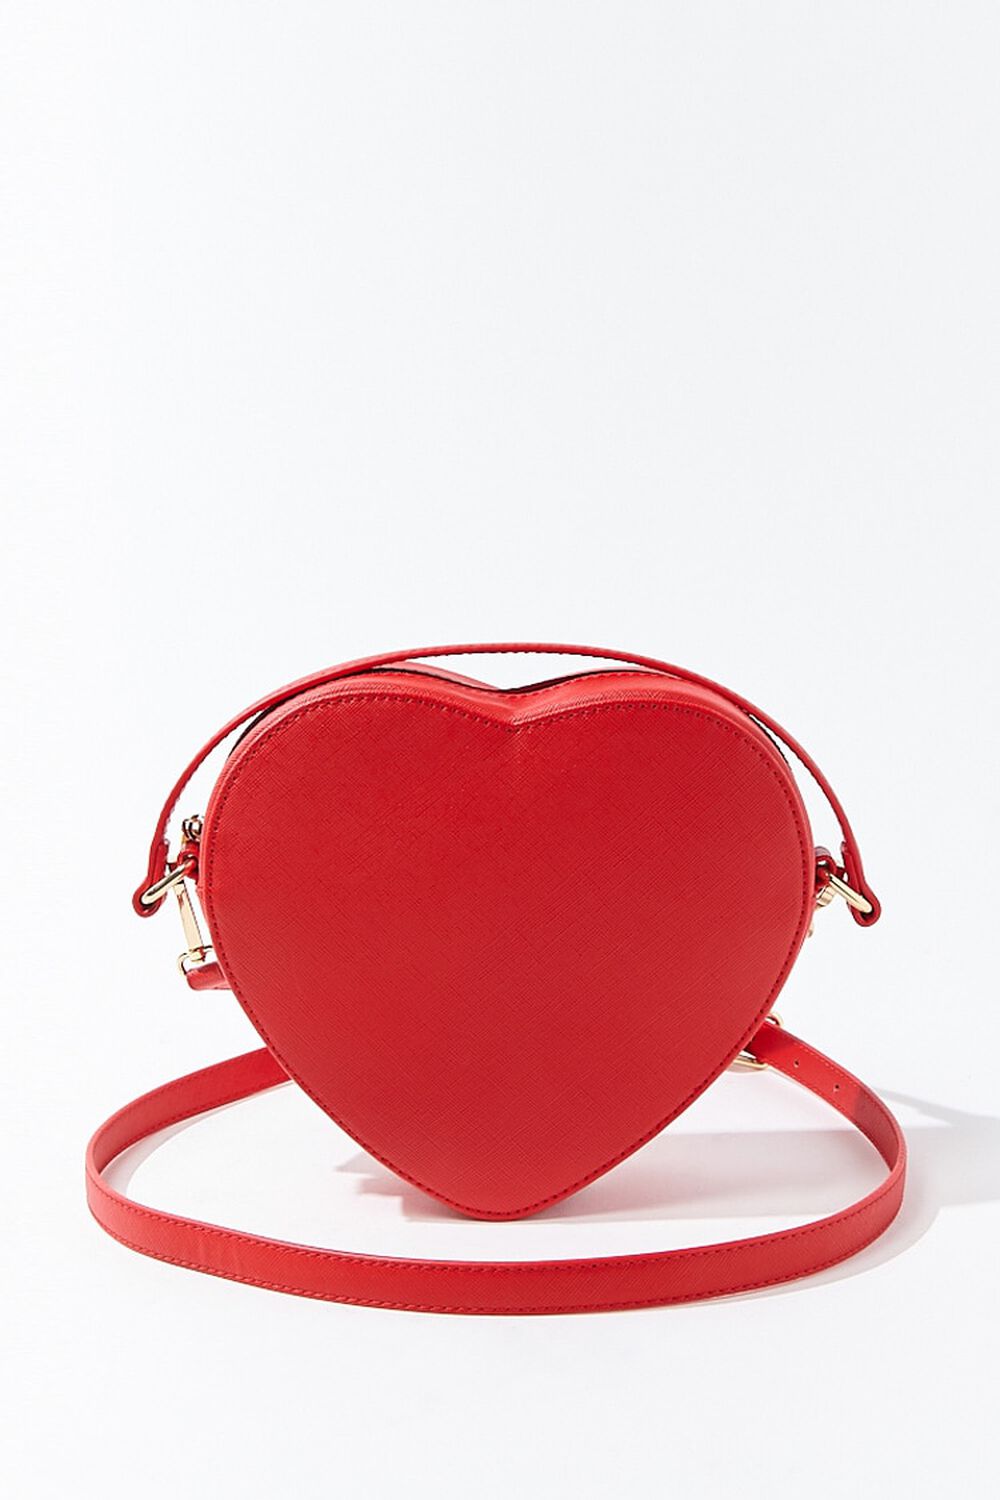 Heart-Shaped Crossbody Bag, image 1